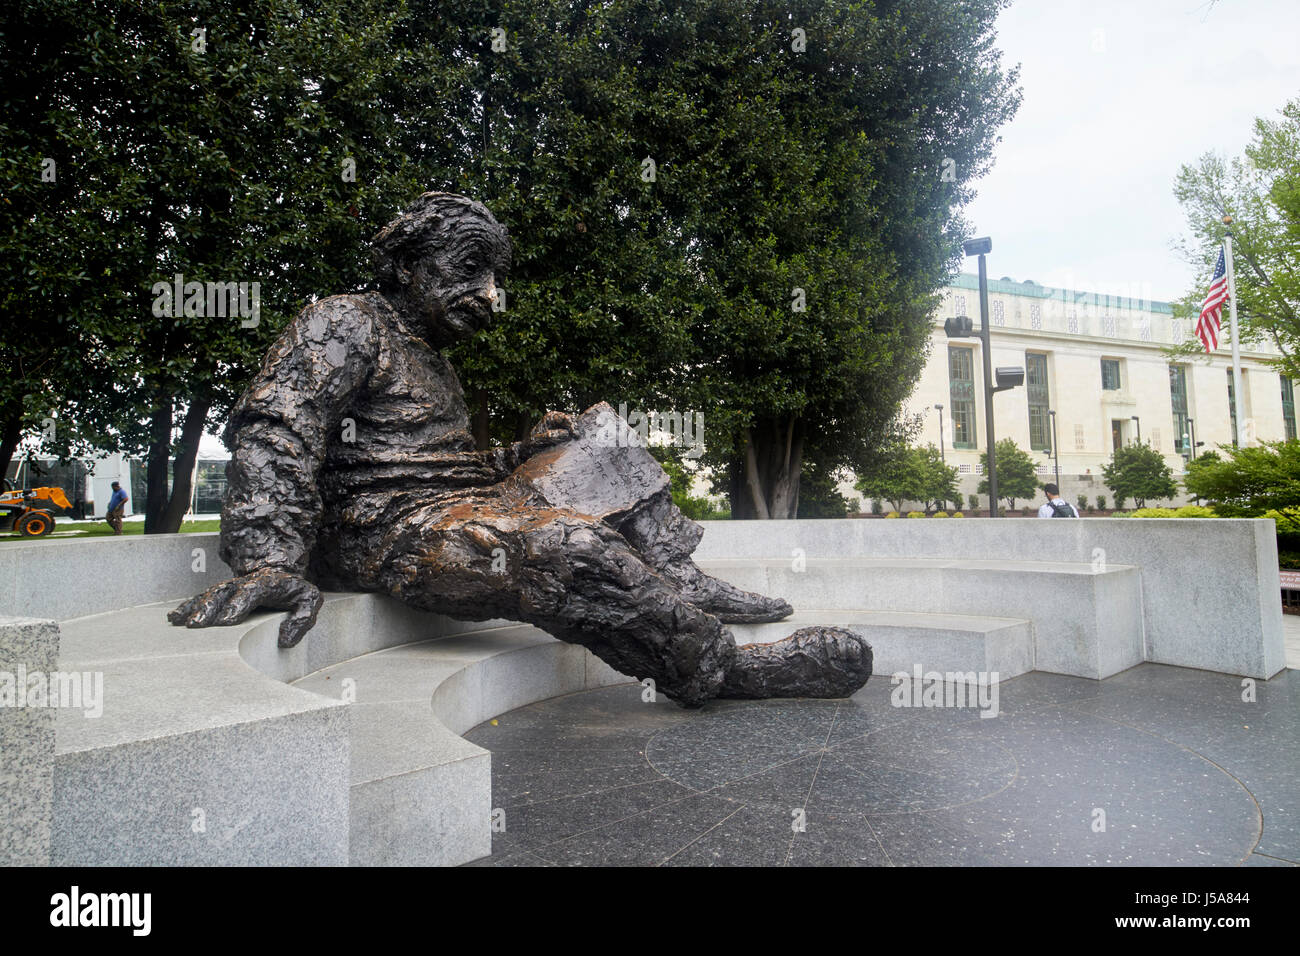 albert einstein memorial at the national academy of sciences Washington DC USA Stock Photo